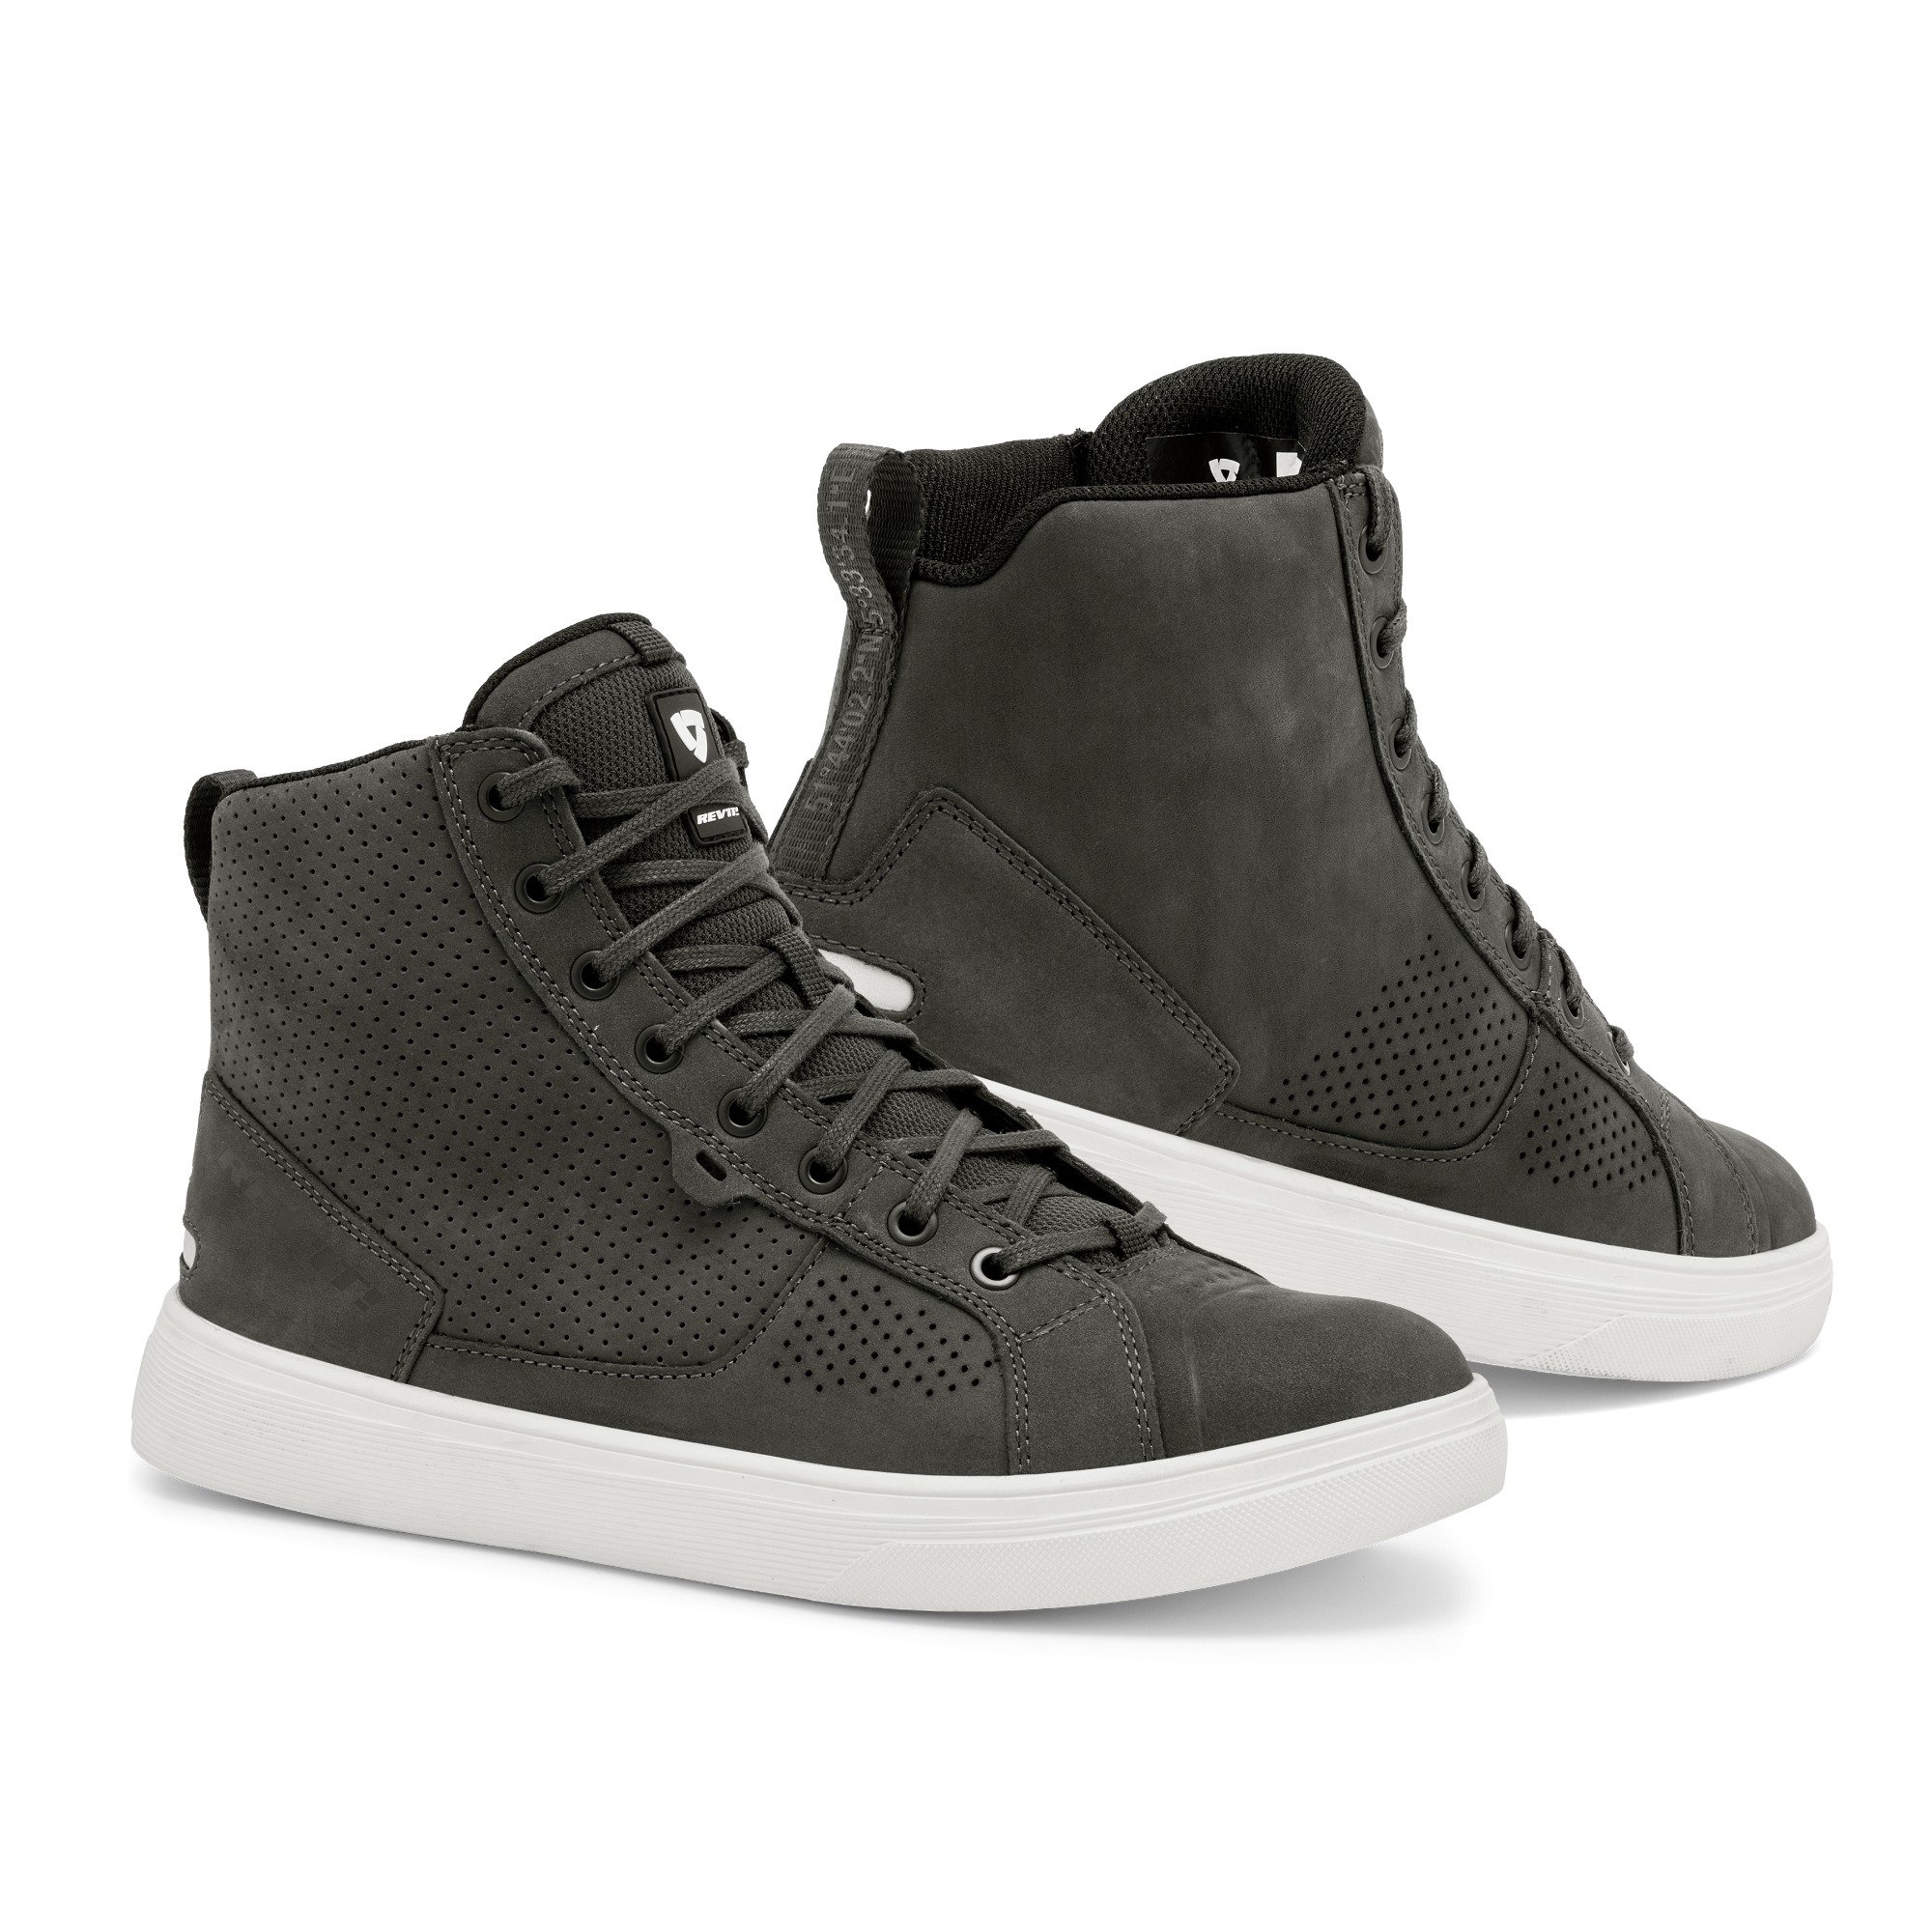 Image of REV'IT! Arrow Shoes Grey White Size 39 EN